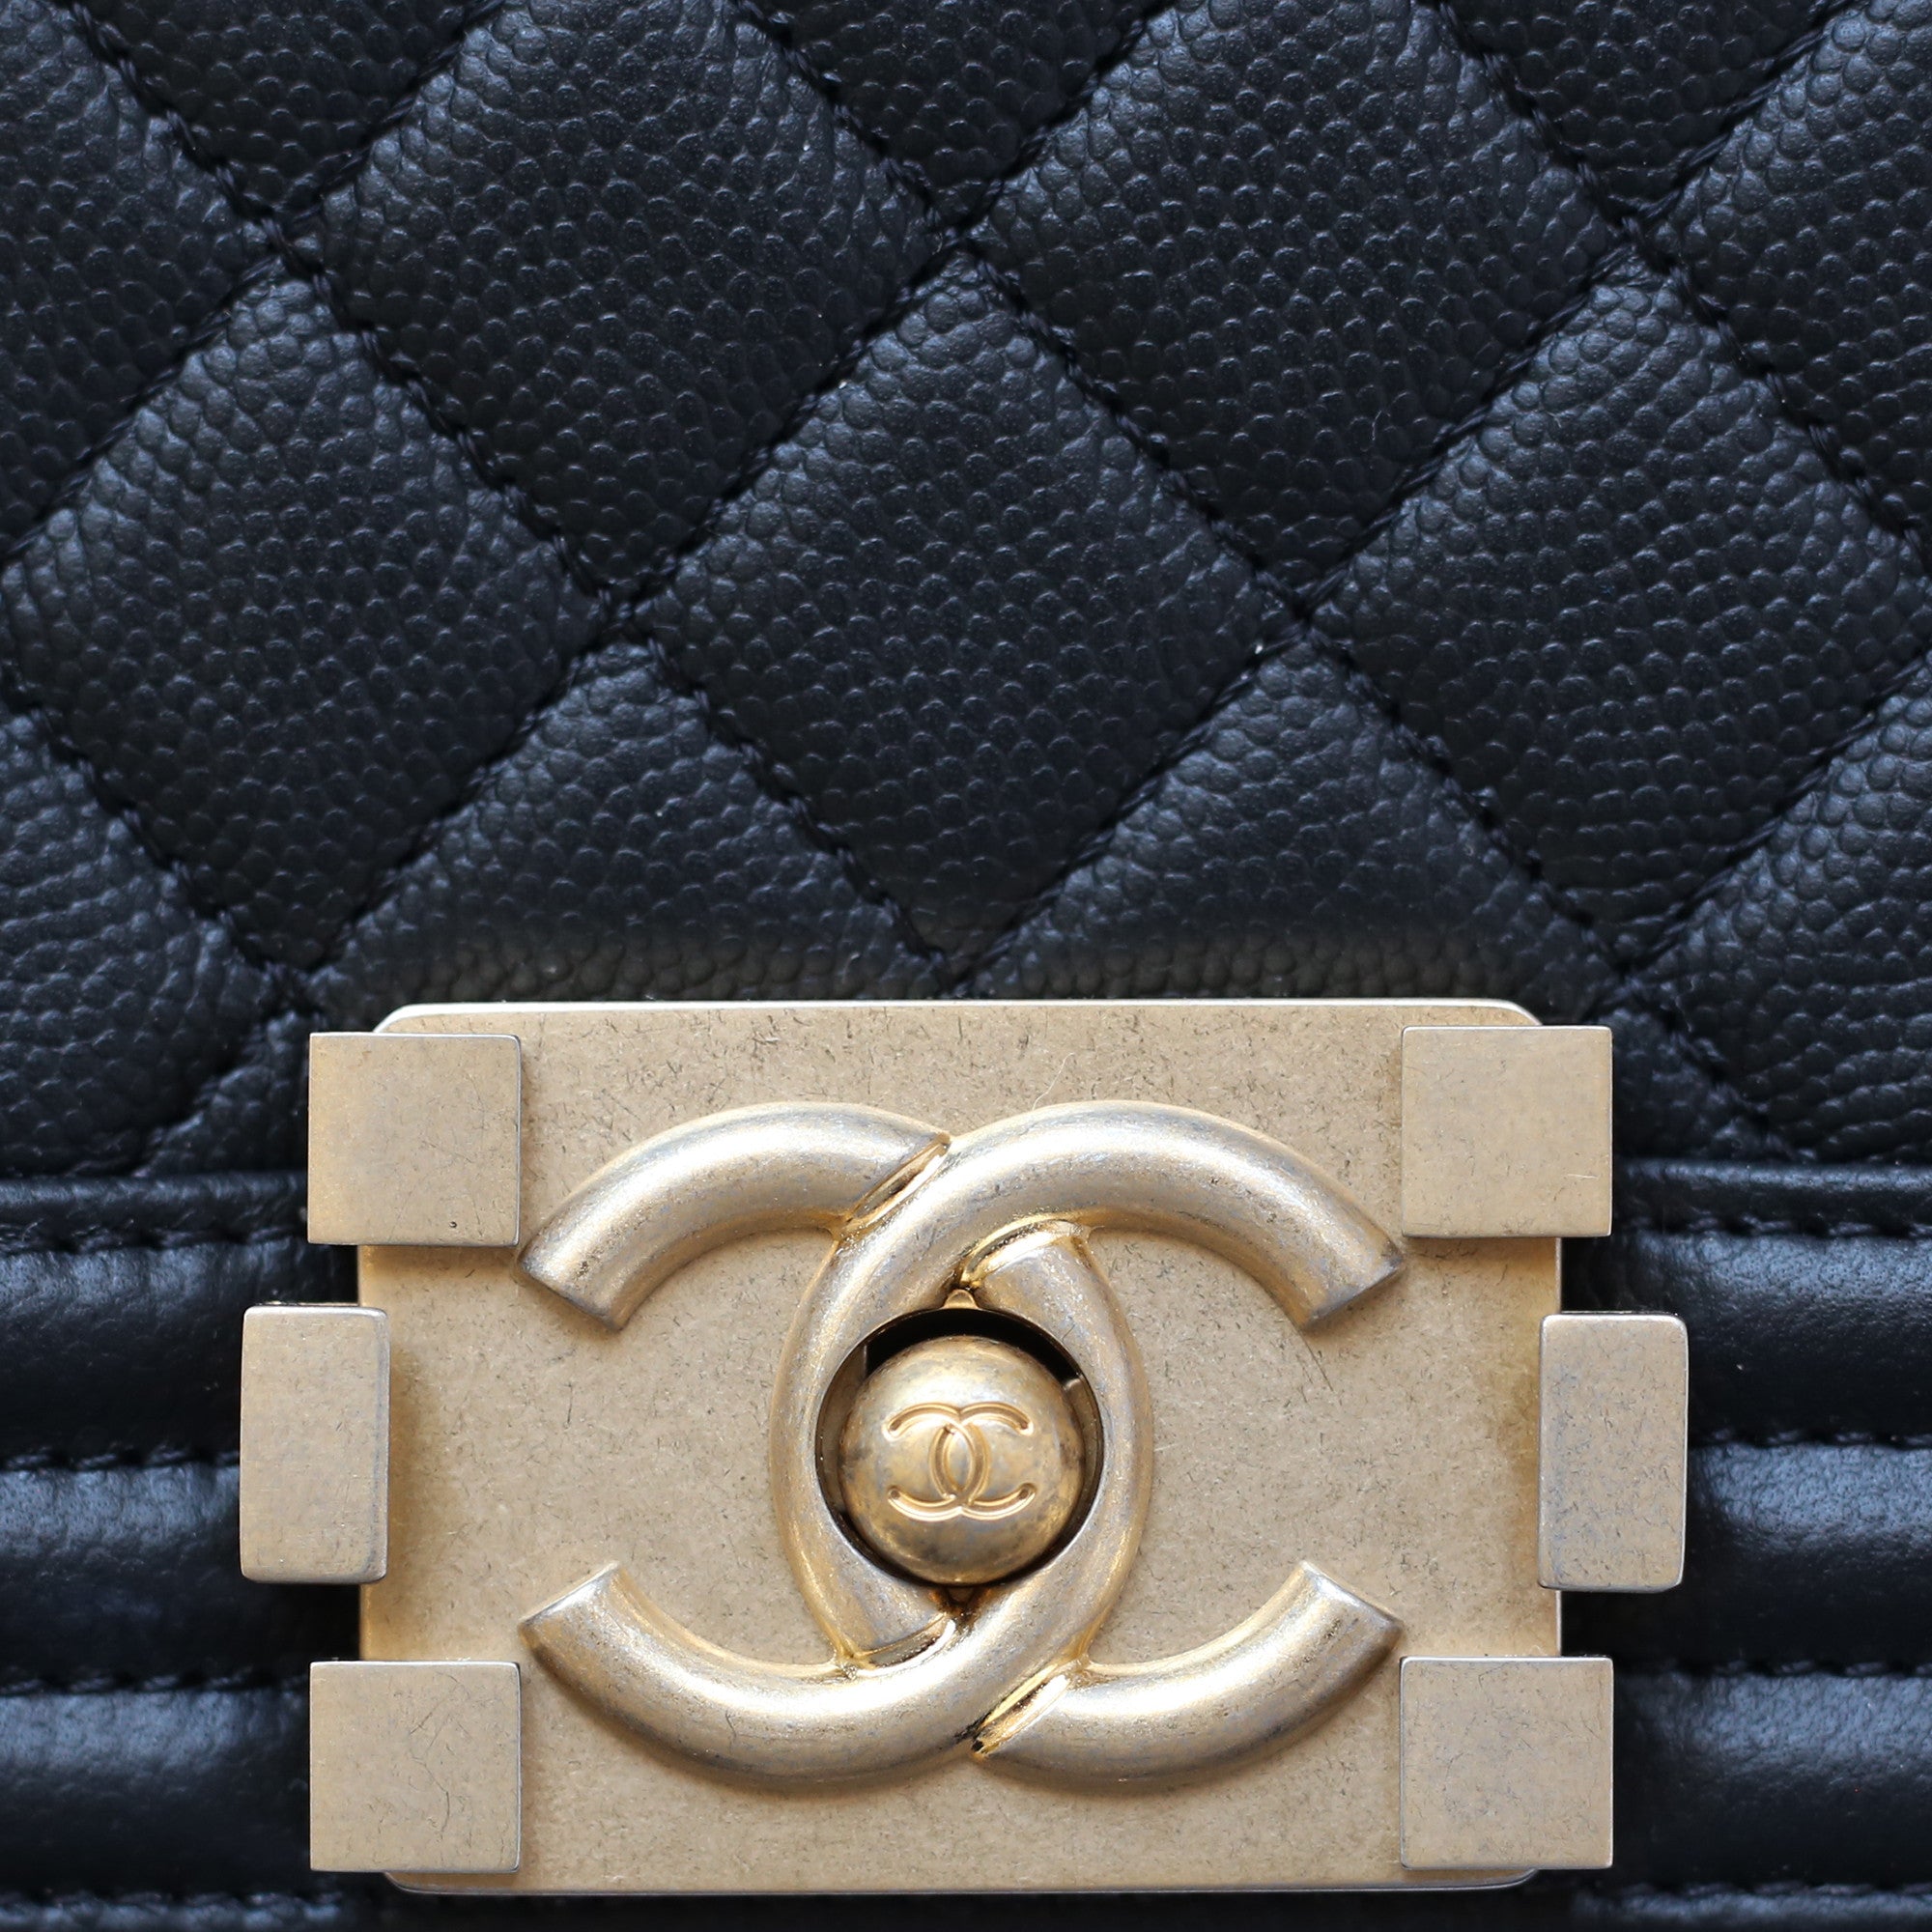 Chanel | Caviar Boy Bag with Aged Gold Hardware | Old Medium